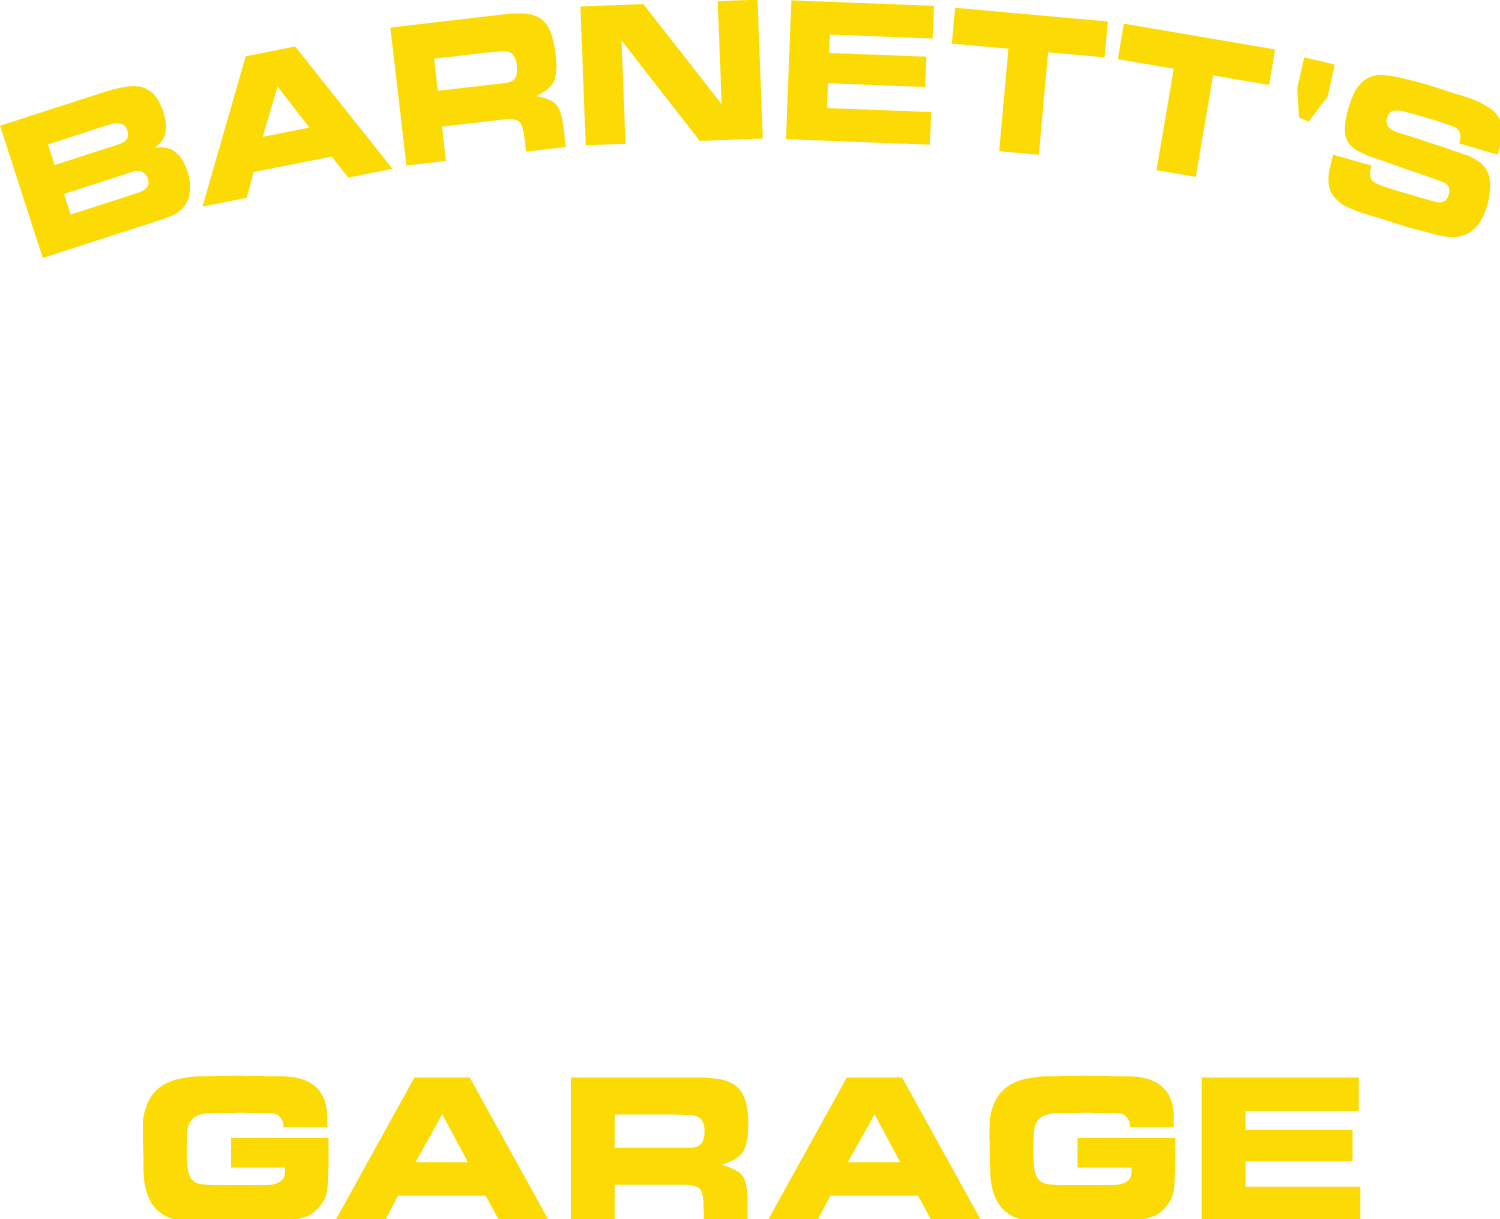 Barnetts Garage